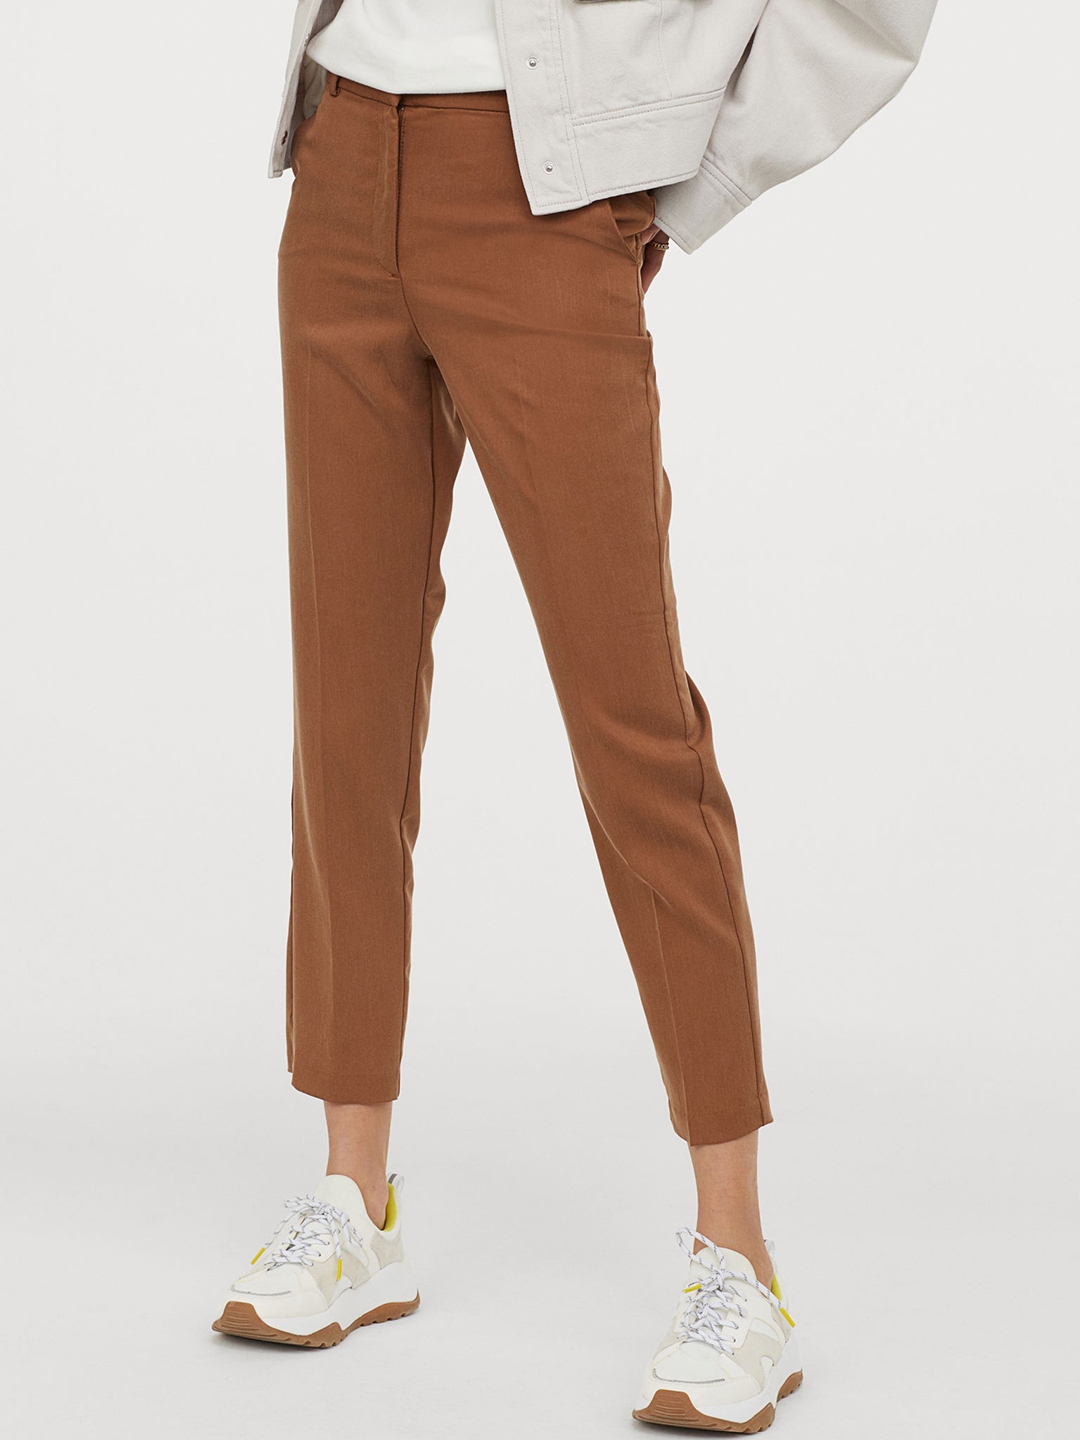 Buy Dollar Missy Brown Regular Fit Cigarette Trousers for Women Online   Tata CLiQ